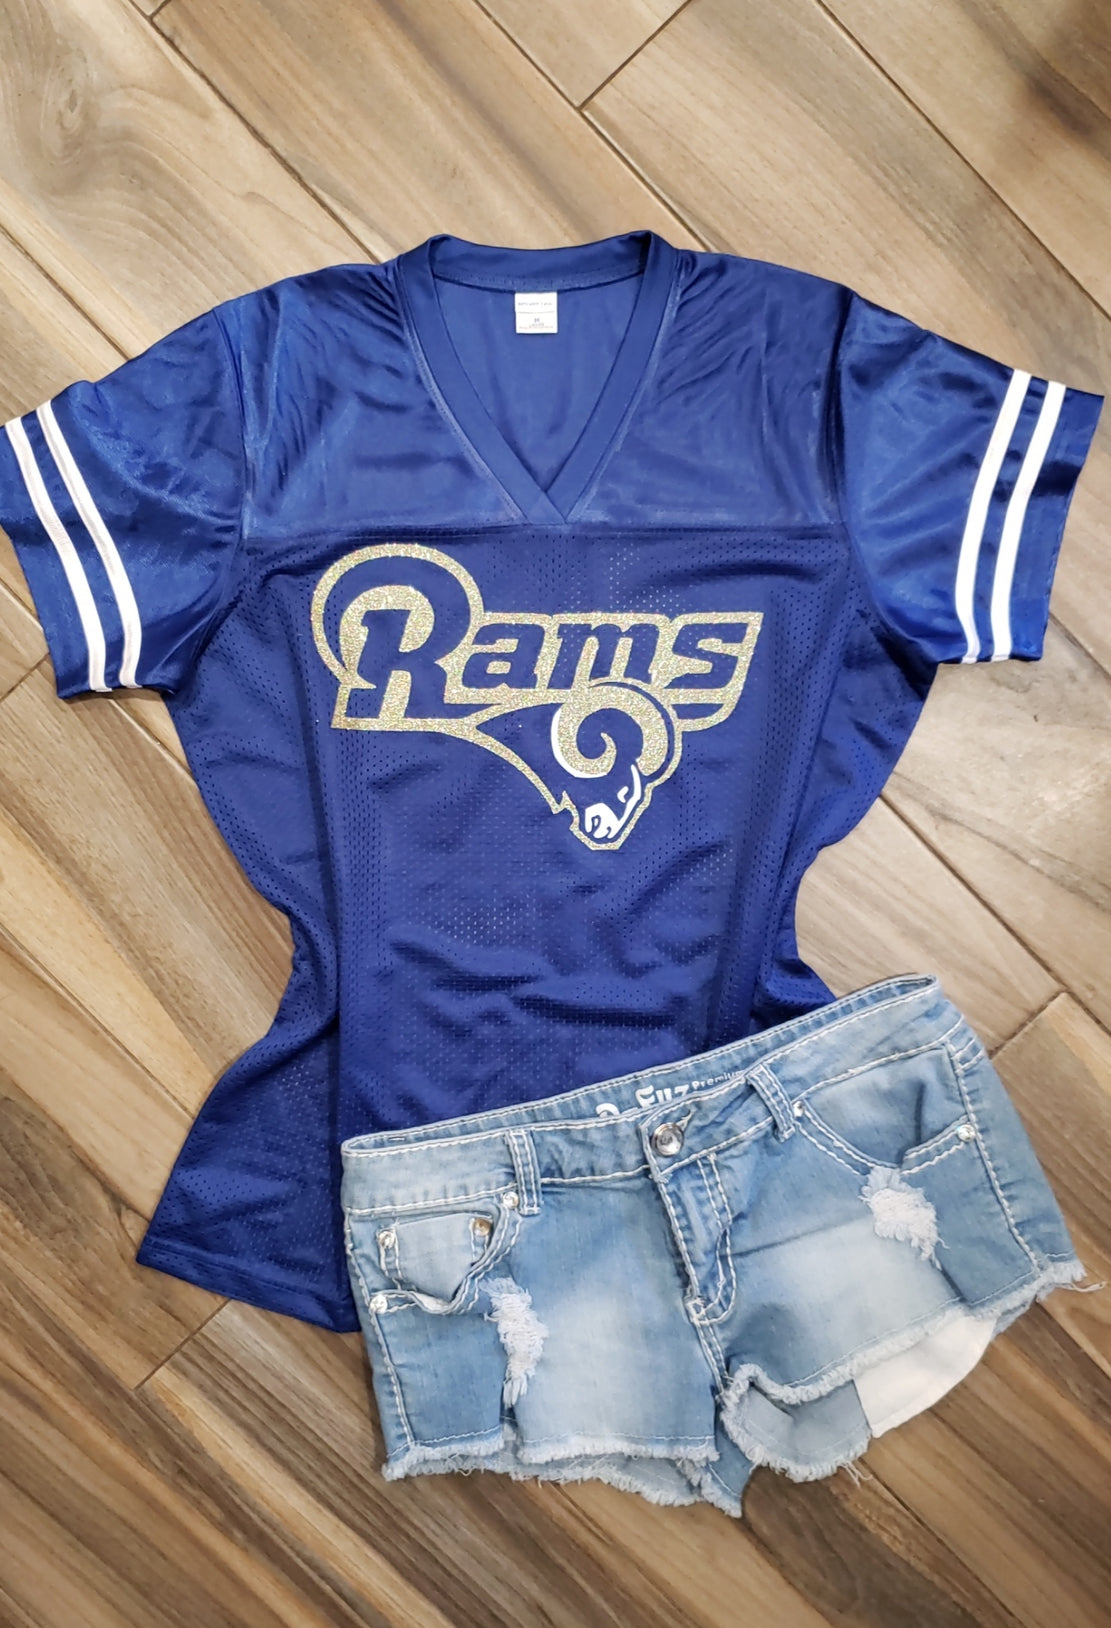 la rams shirt women's